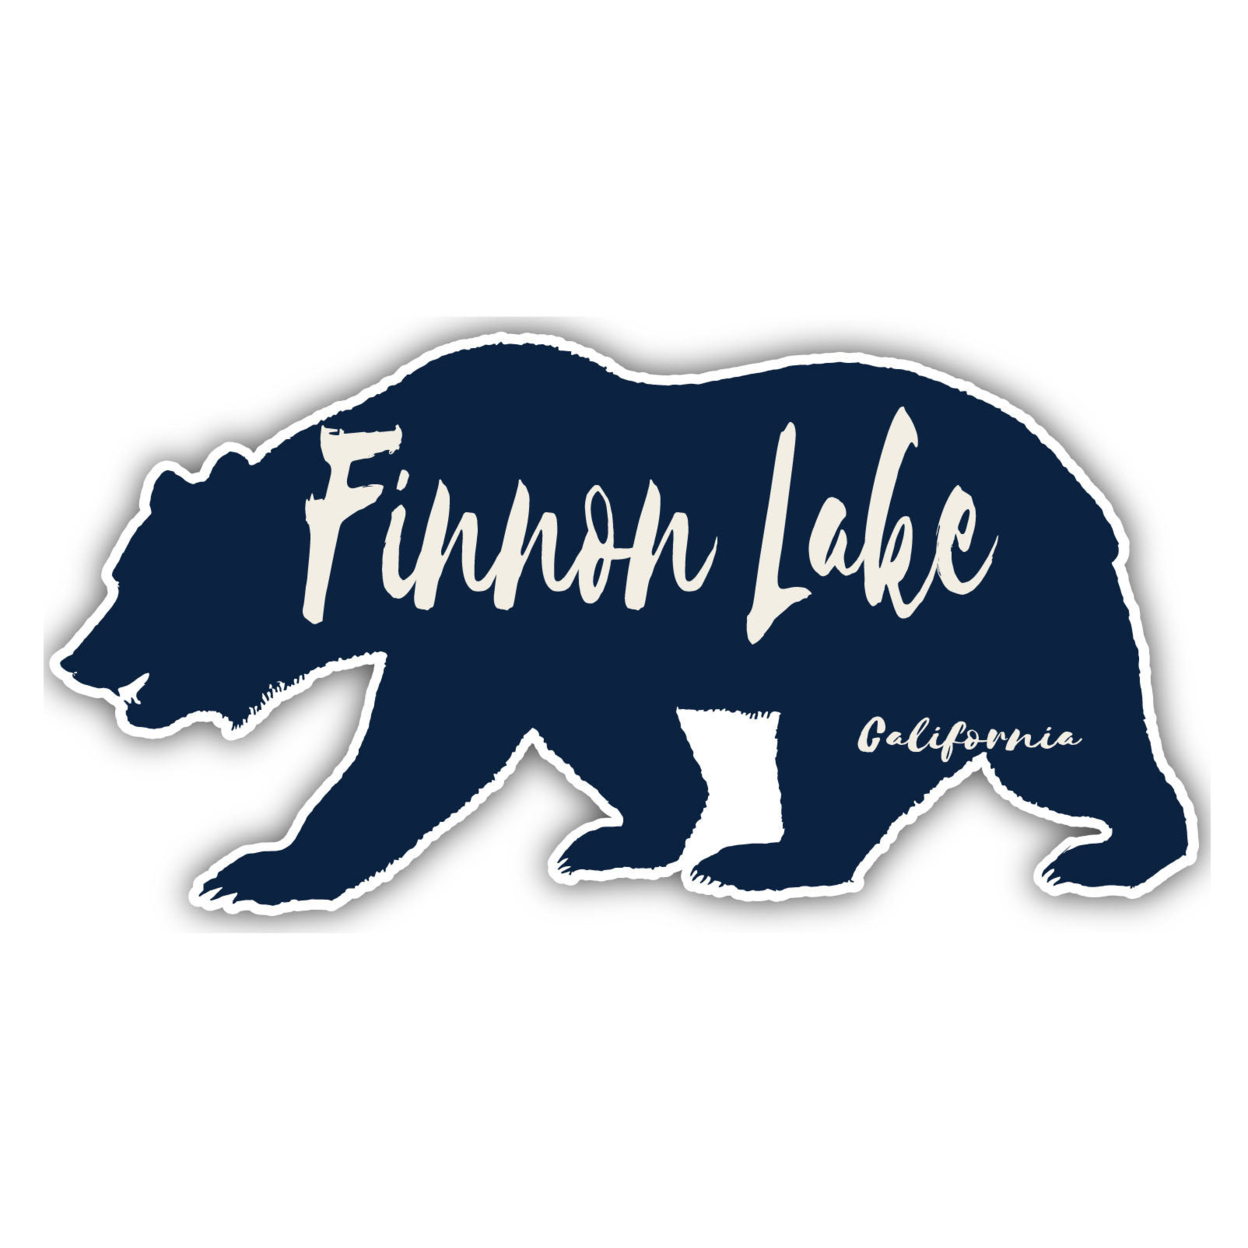 Finnon Lake California Souvenir Decorative Stickers (Choose Theme And Size) - 4-Pack, 6-Inch, Tent